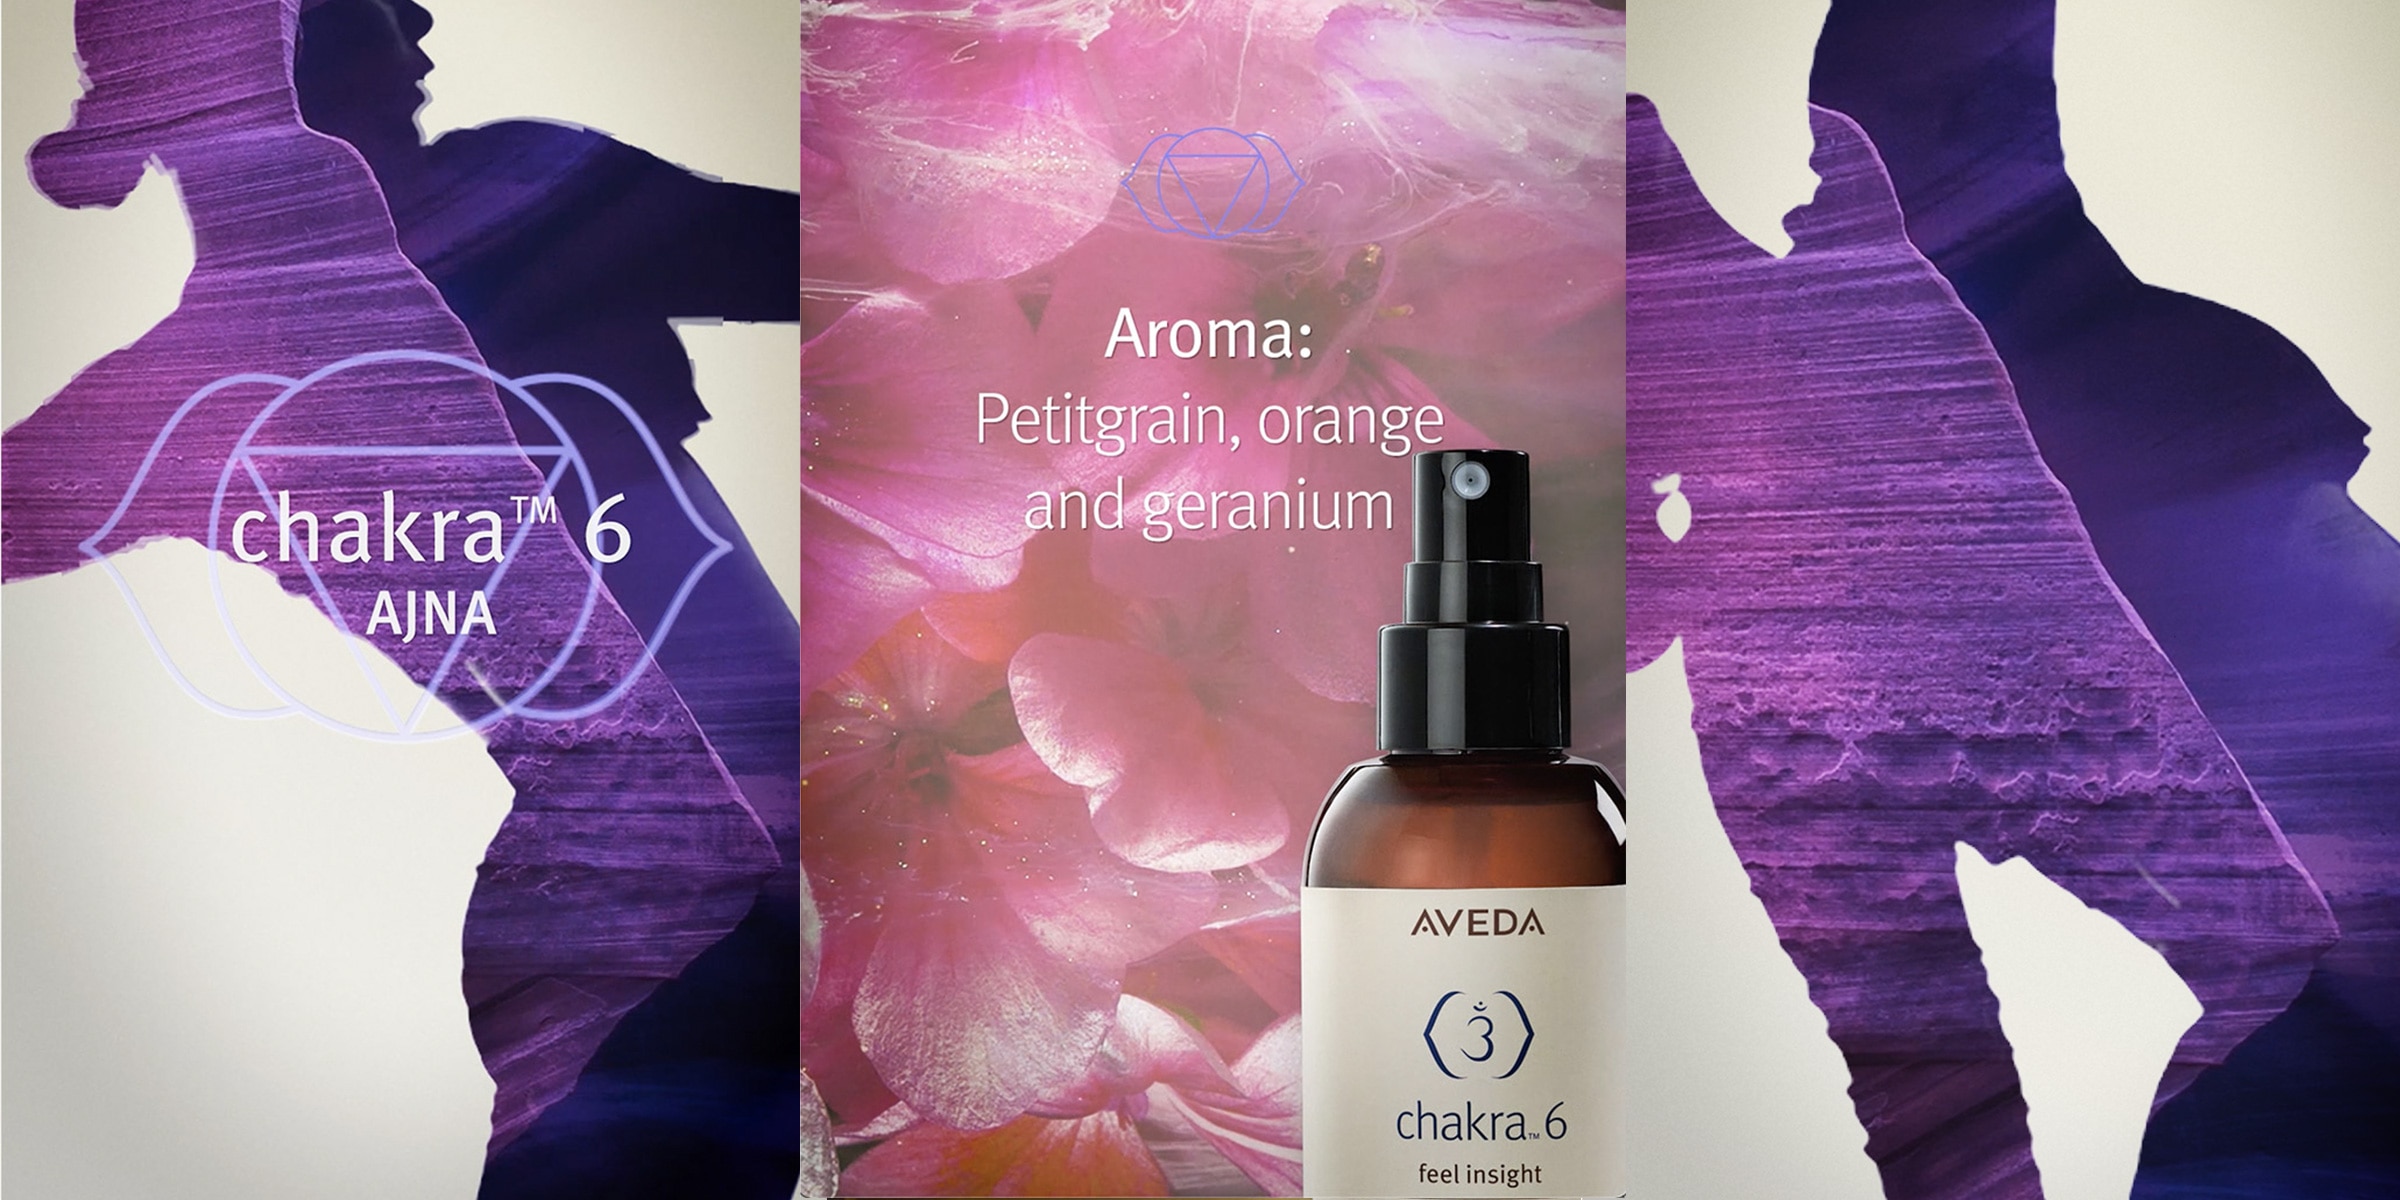 Chakra 6 aroma includes petitgrain, orange and geranium